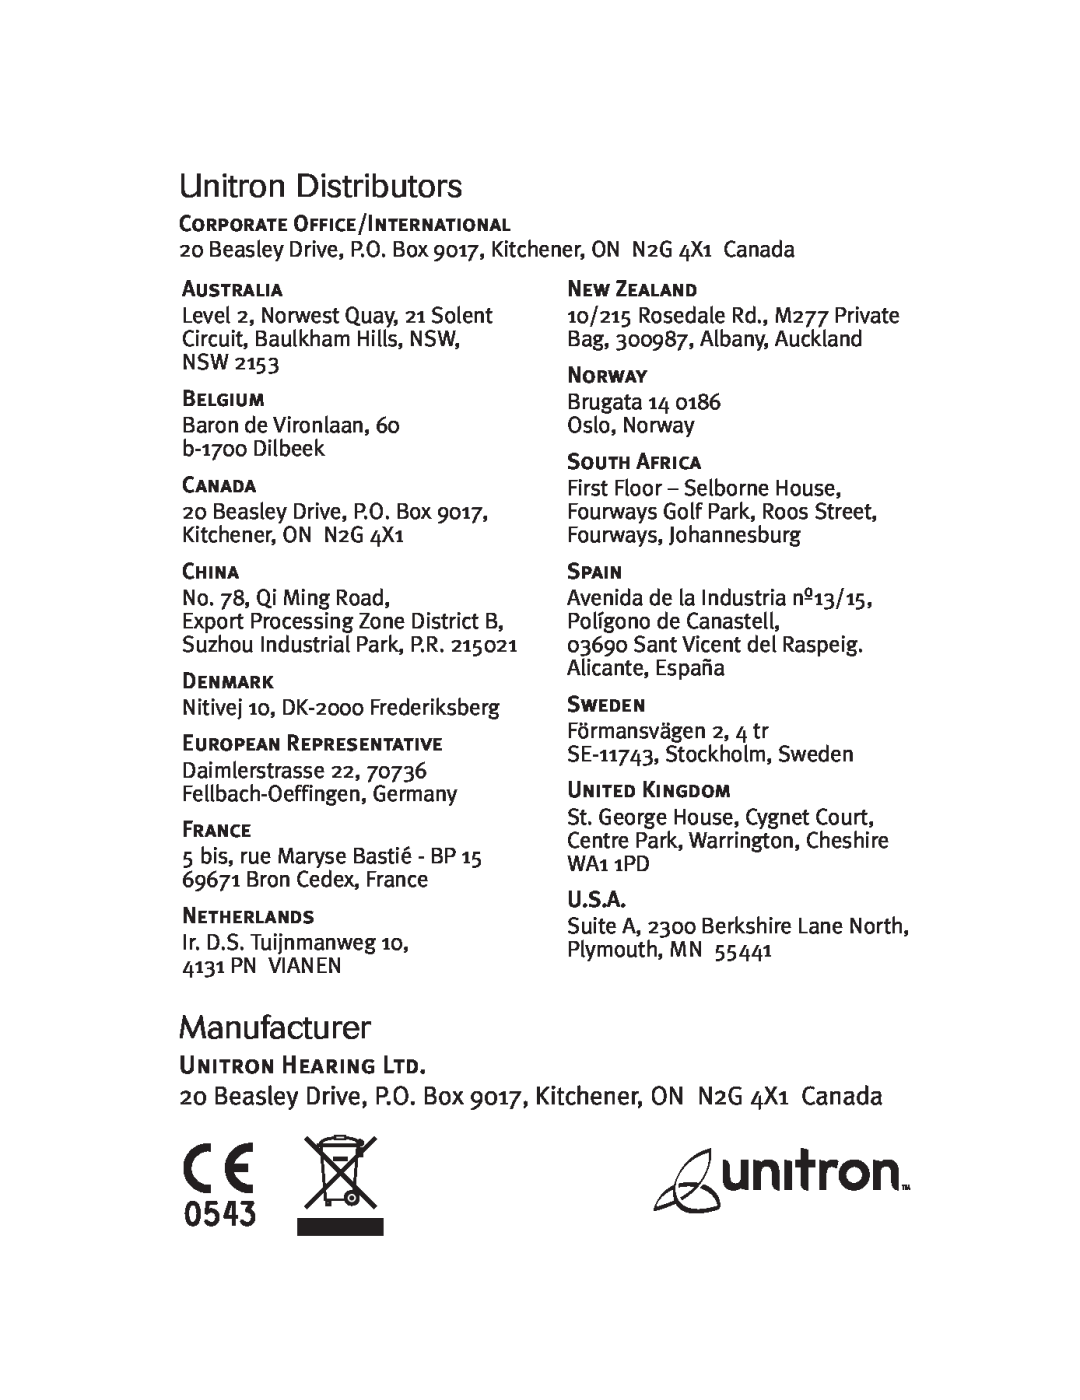 Unitron Hearing Aid Moda 13 Unitron Distributors, Manufacturer, Beasley Drive, P.O. Box 9017, Kitchener, ON N2G 4X1 Canada 